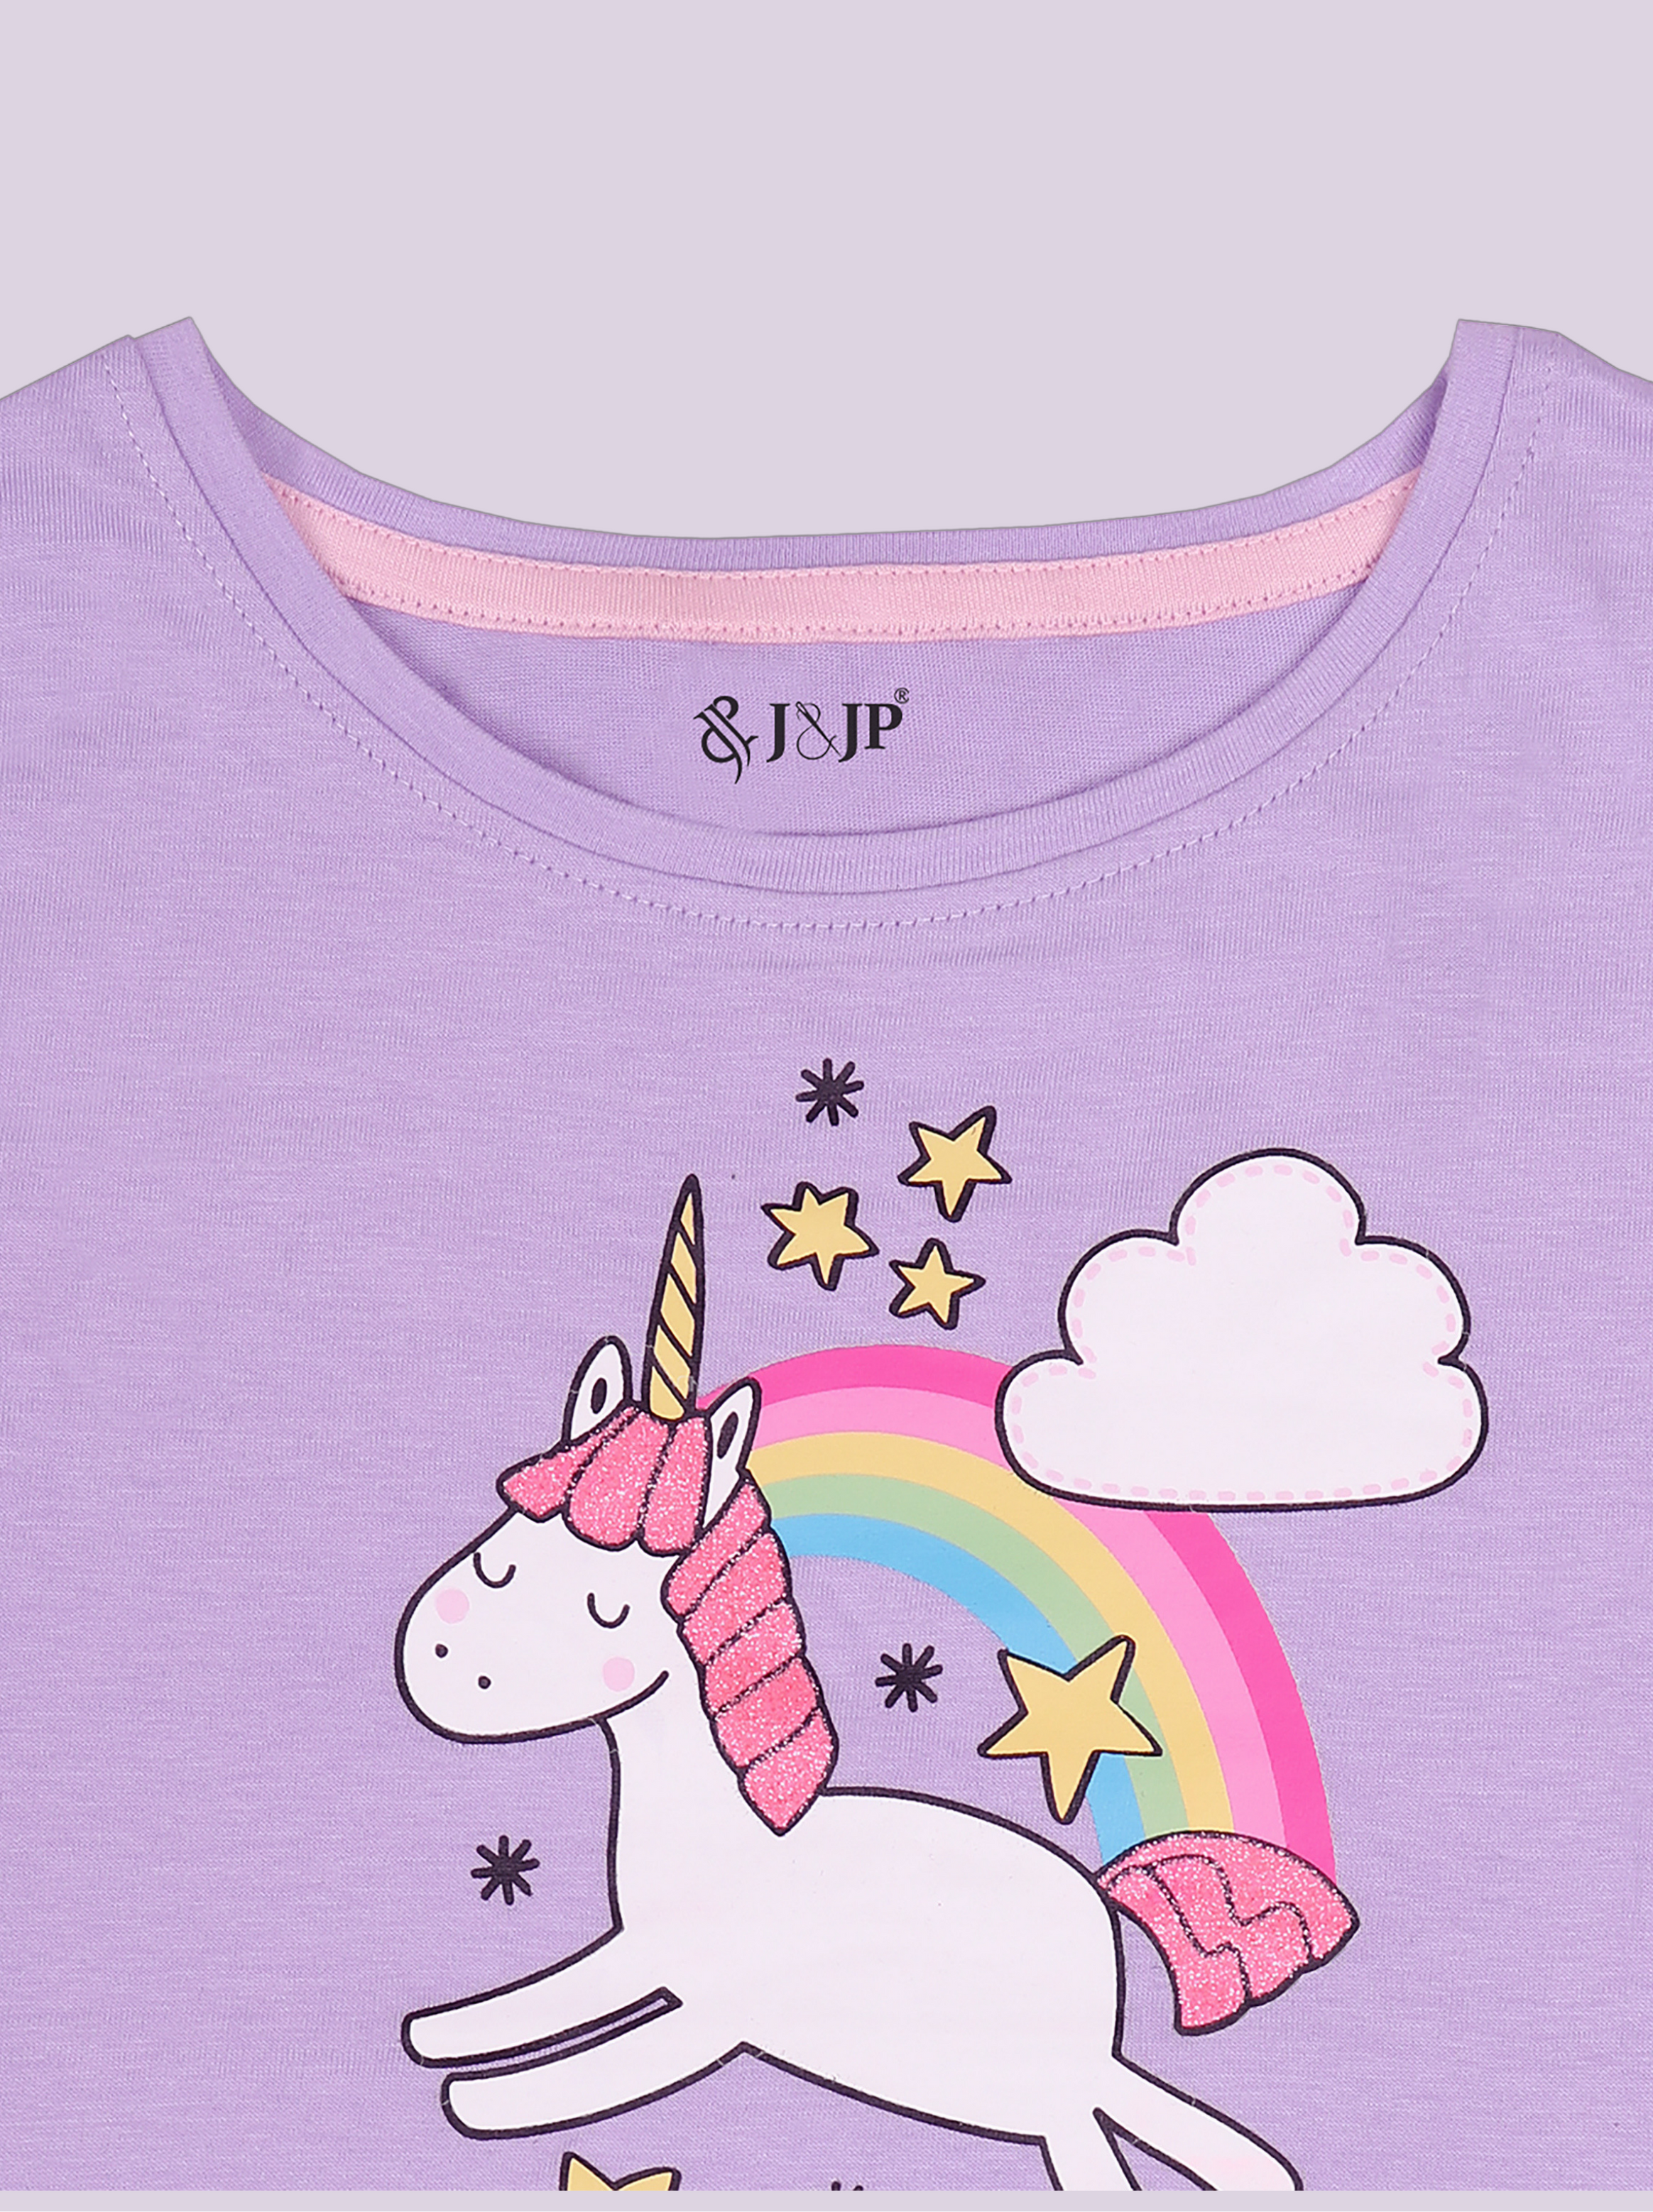 Kids Girls Violet Half sleeve Unicorn printed T-Shirt